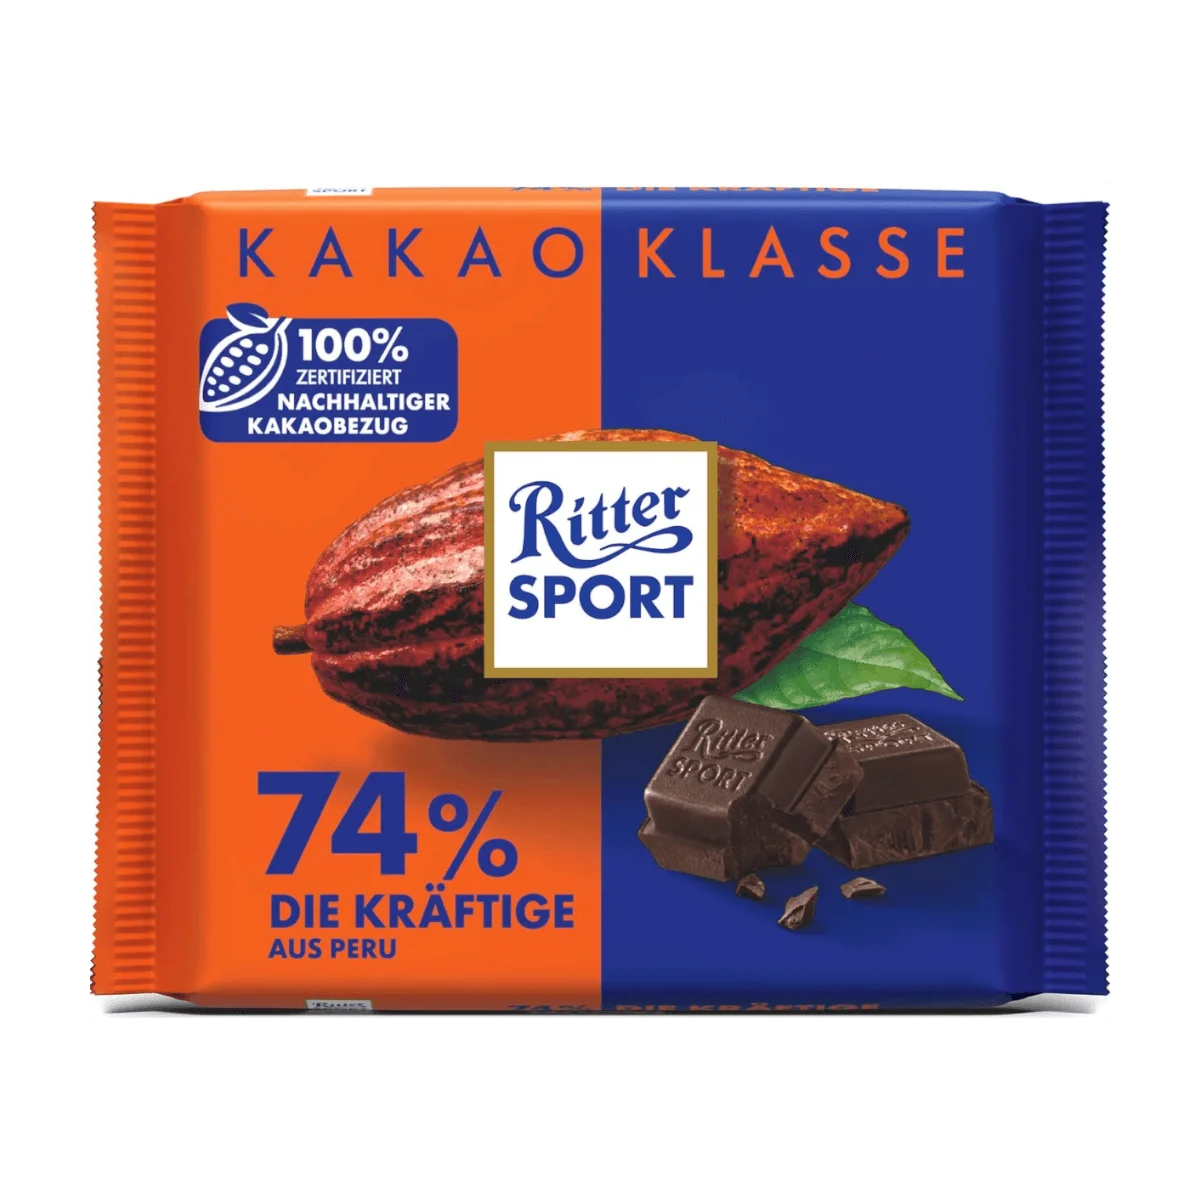 Ritter Sport Kakao-Klasse 74% Die Kräftige aus Peru, 100 g